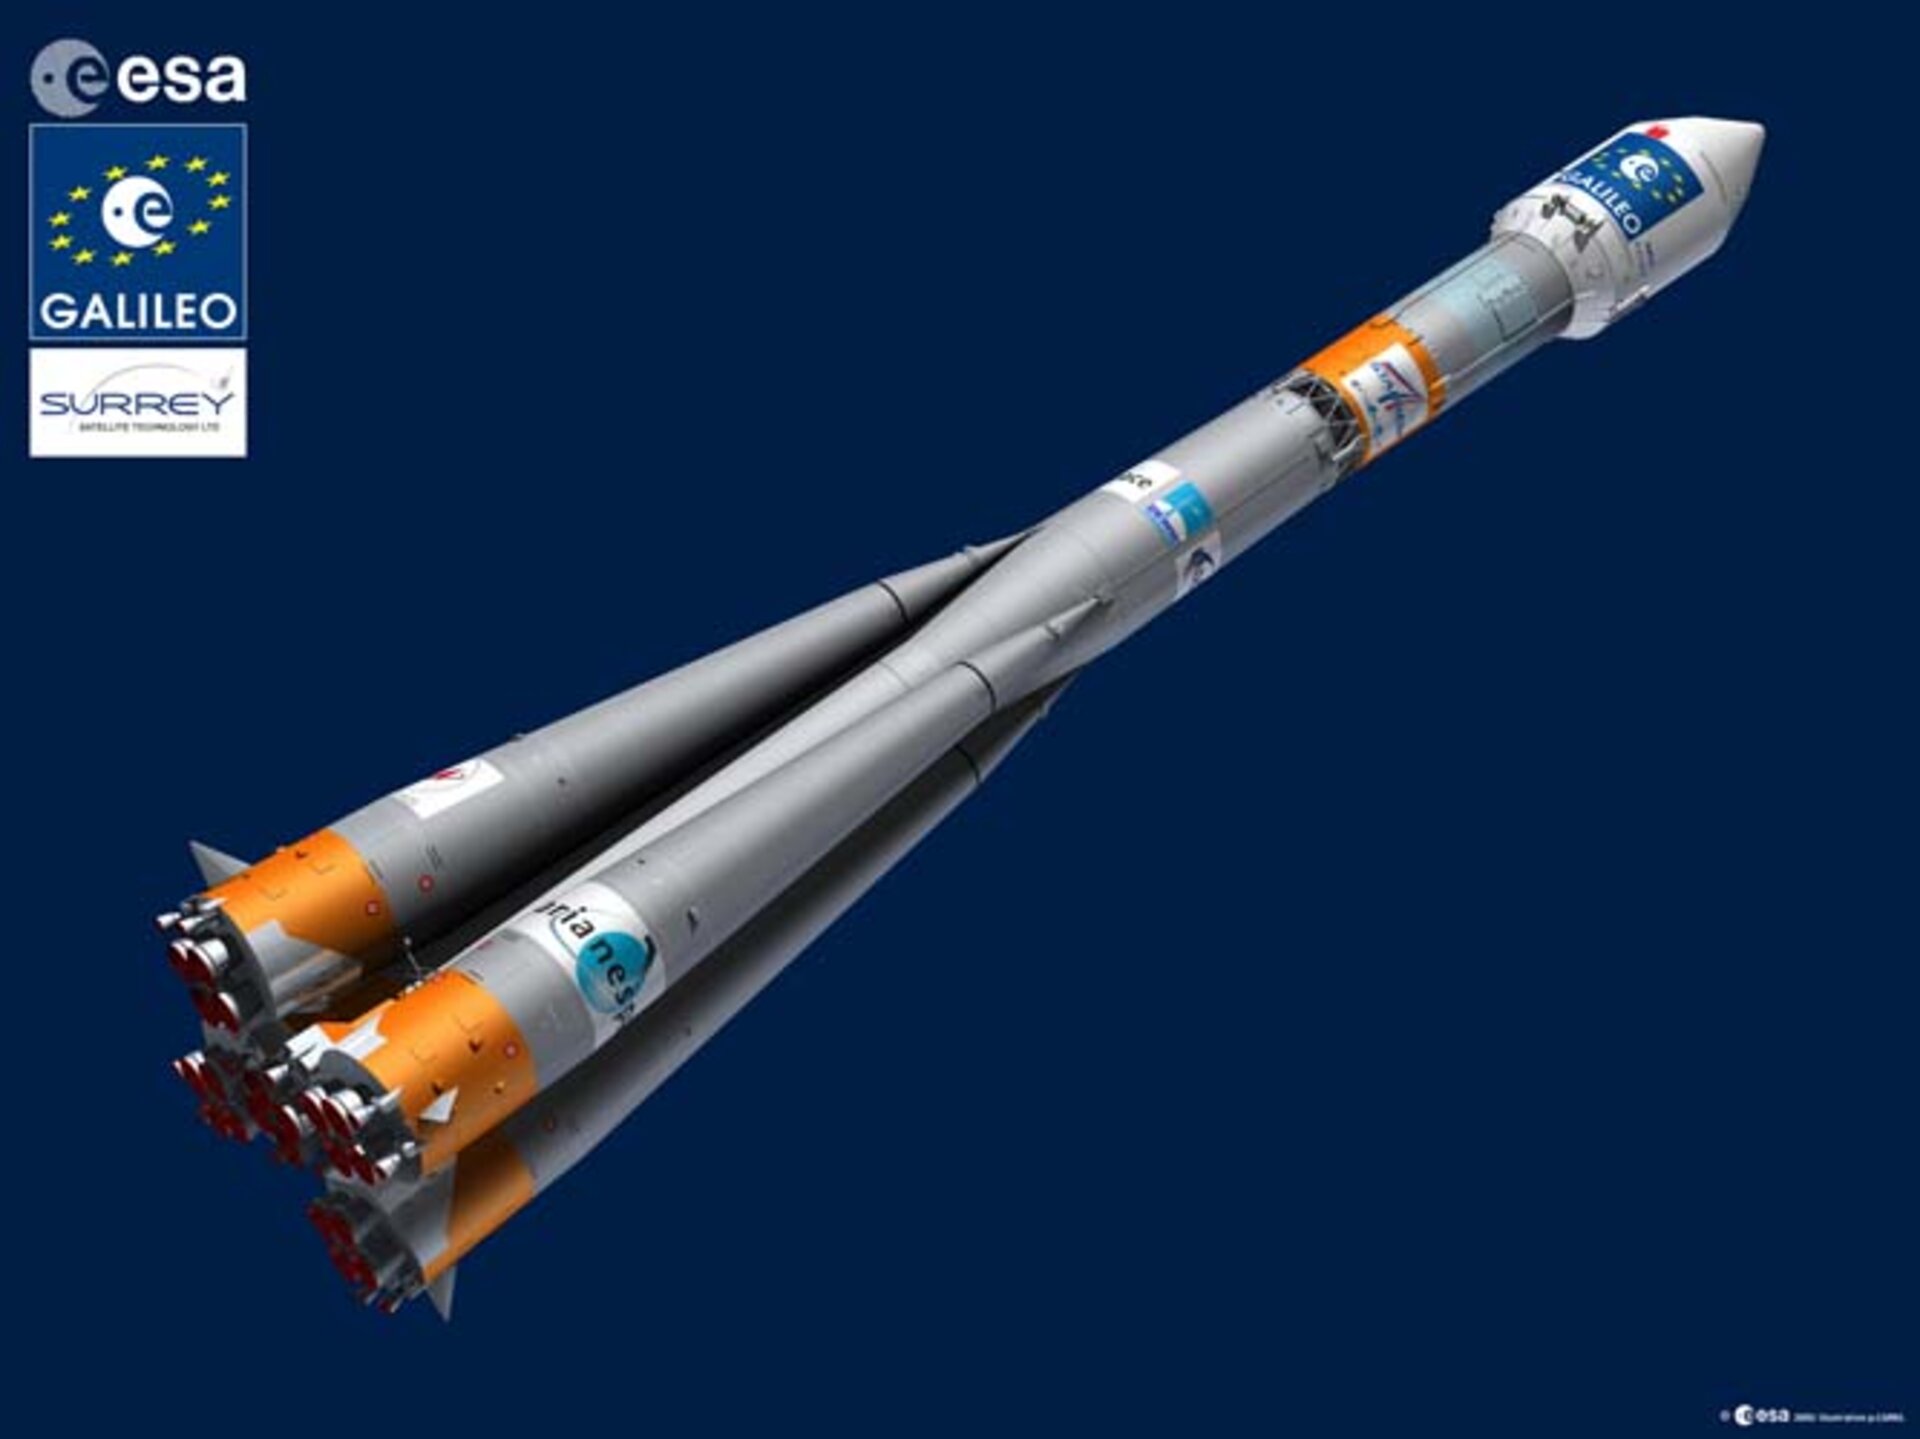 GSTB-V2/A launch - Soyuz/Fregat launch vehicle